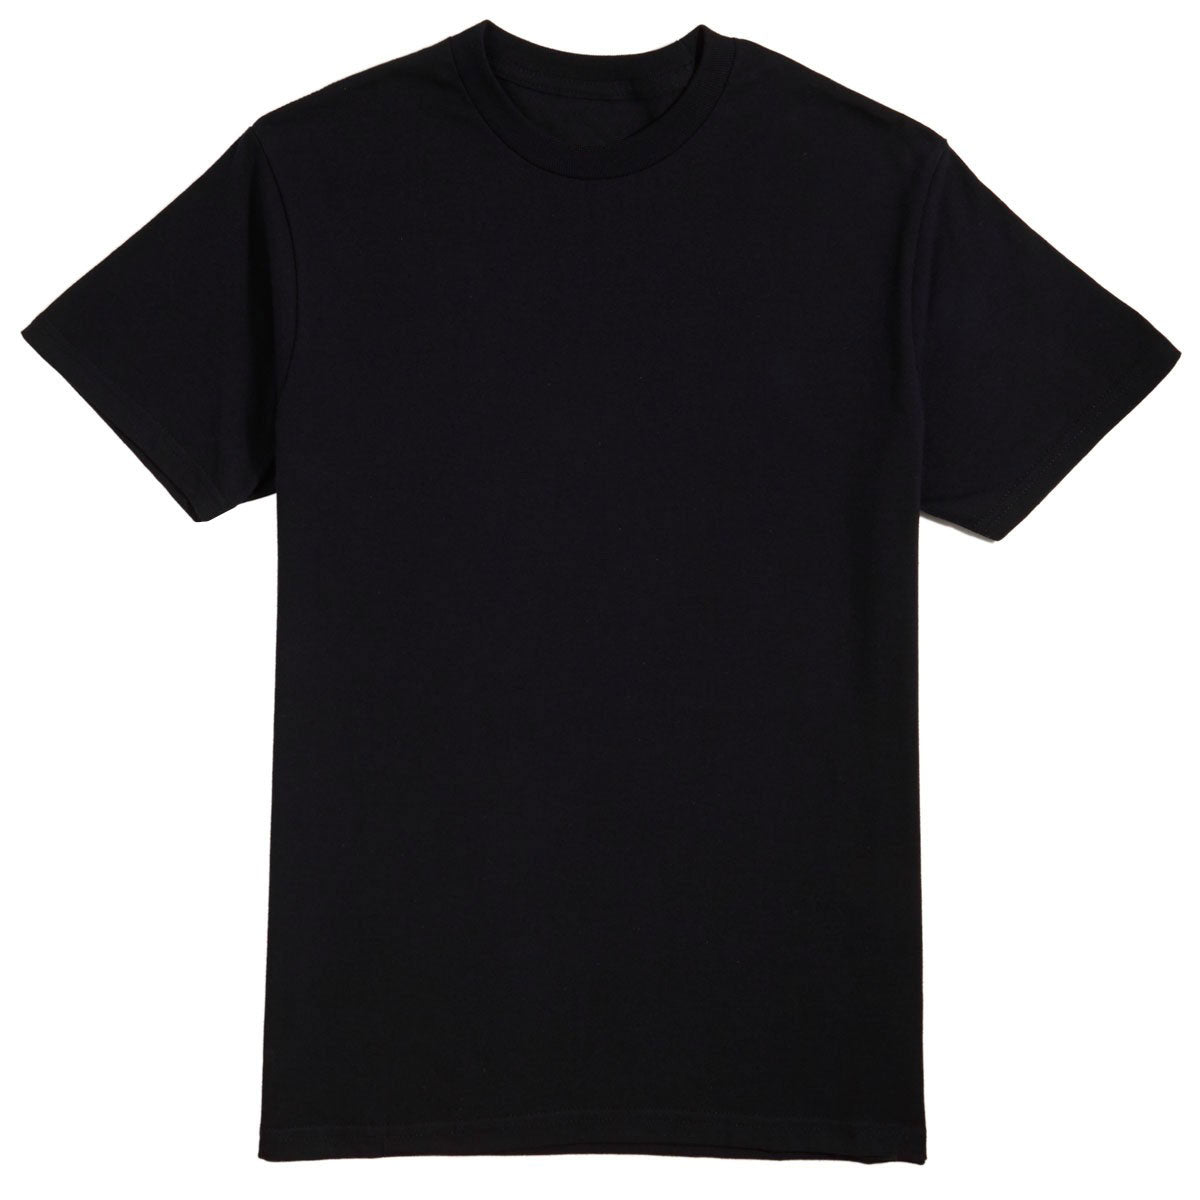 Converse Flash Sheet T-Shirt - Black - XL image 1